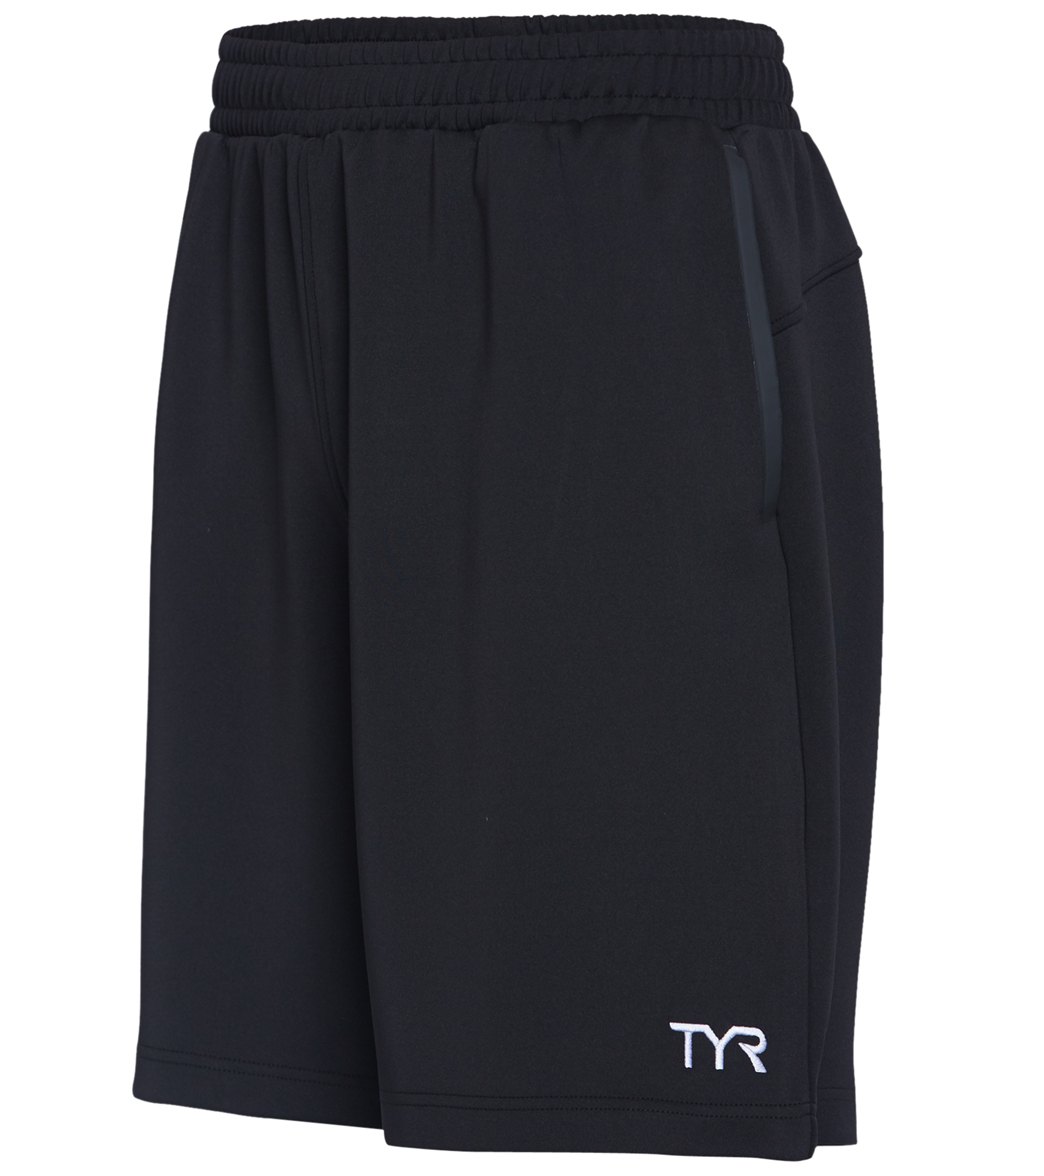 TYR Men's Team Short - Black Medium Size Medium Polyester - Swimoutlet.com